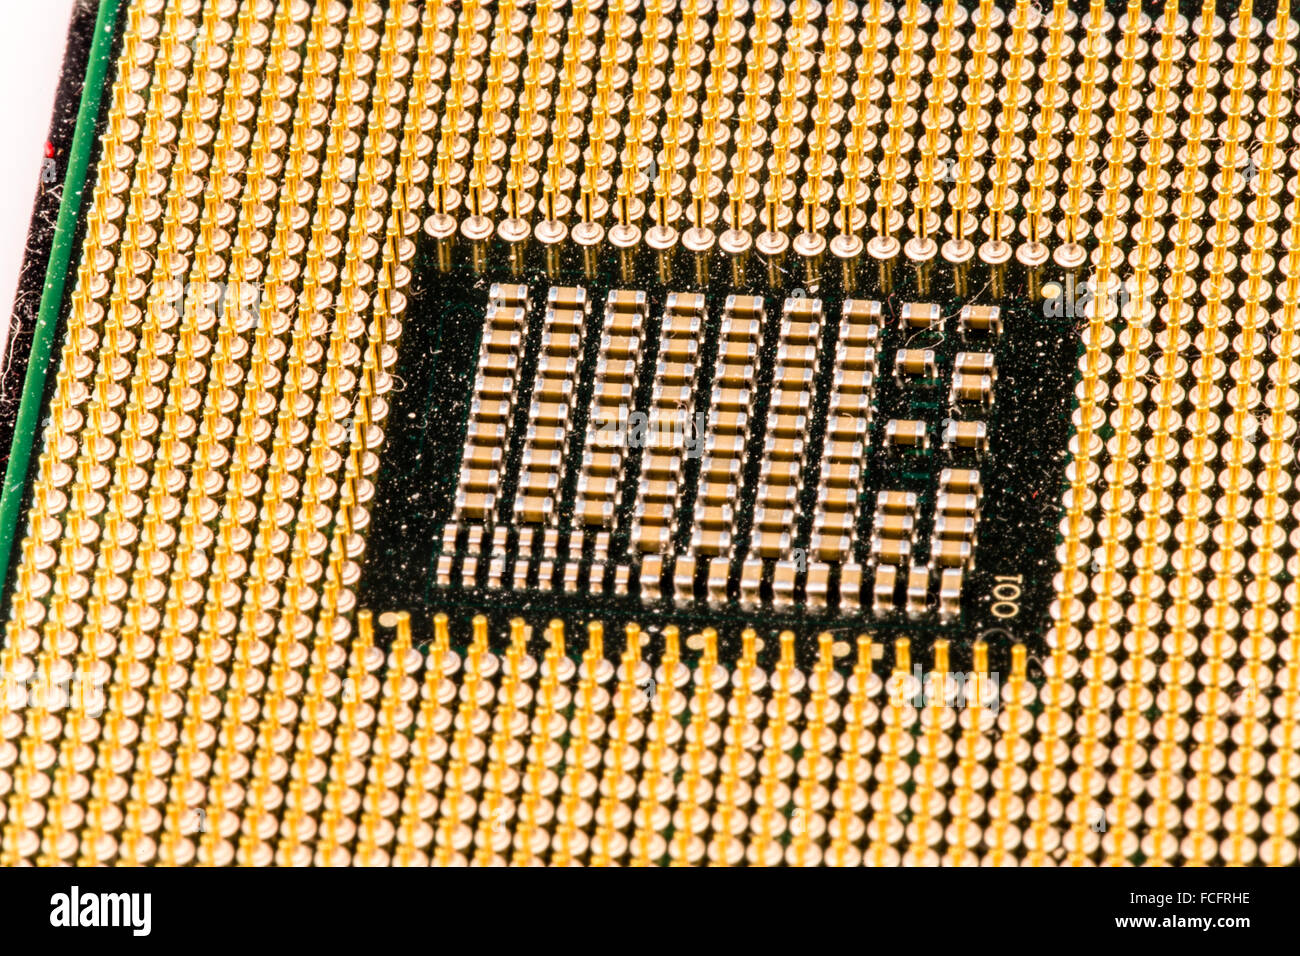 CPU, central processor unit, computer part Stock Photo